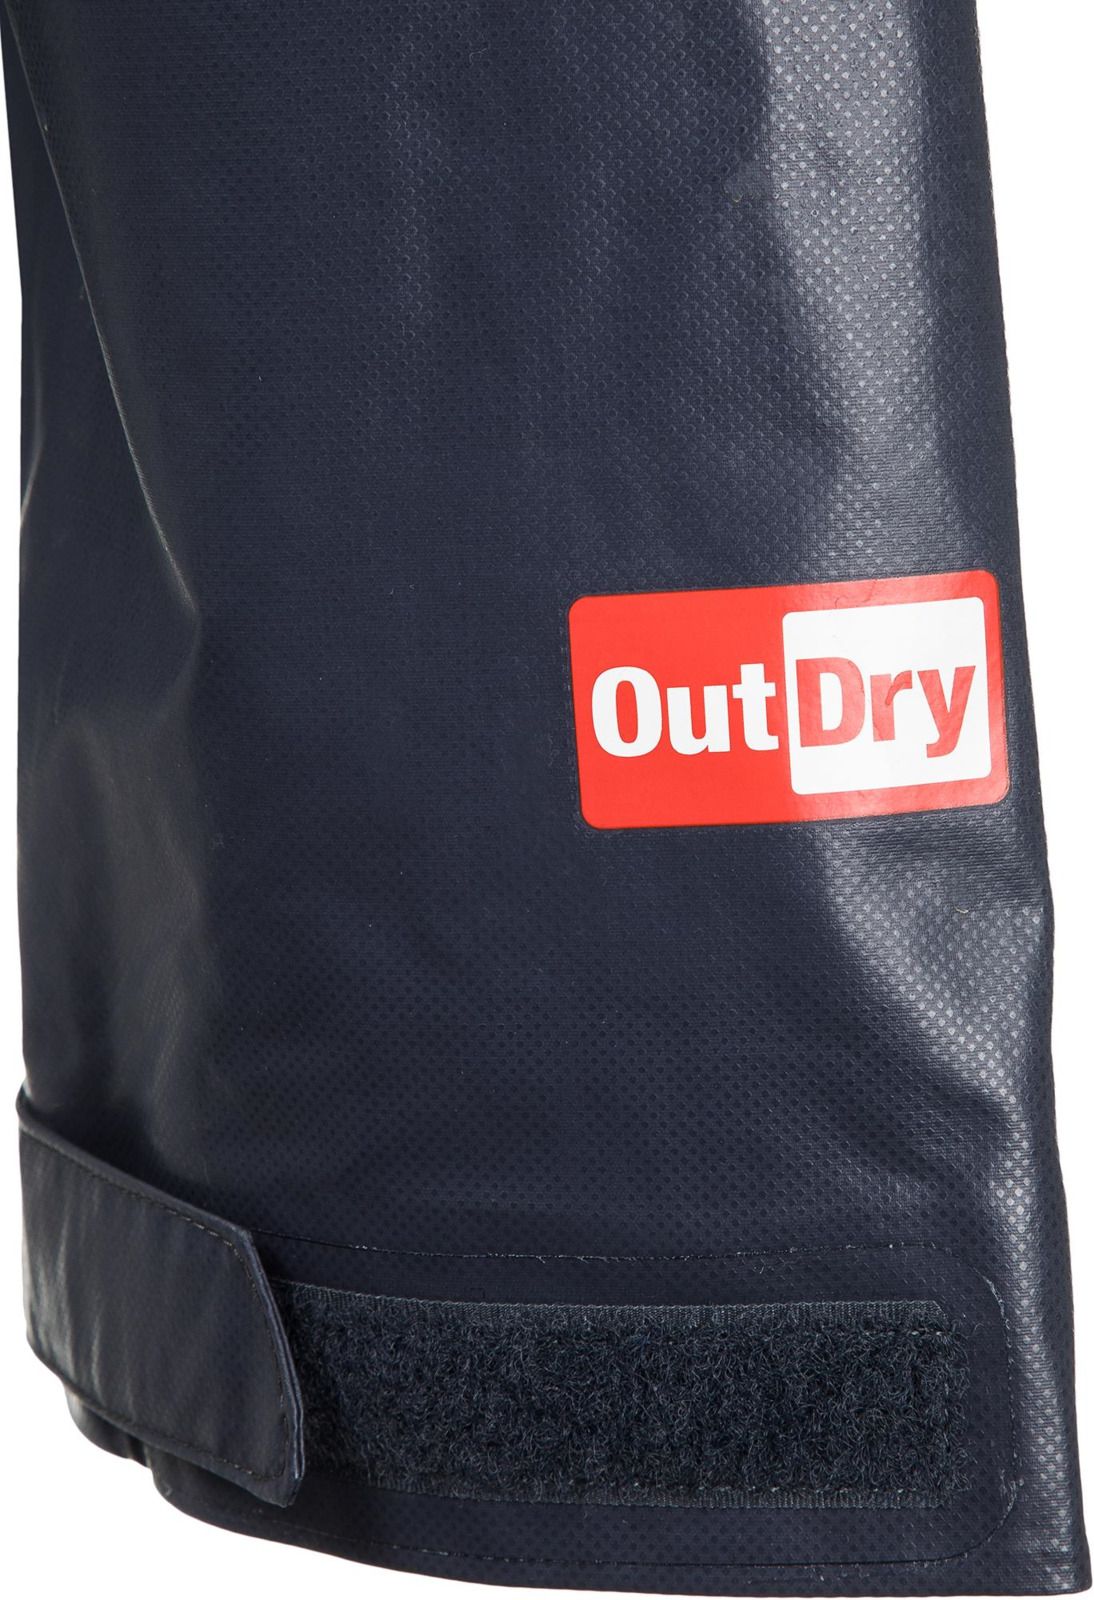   Columbia OutDry Ex Blitz Jacket, : -. 1849071-464.  L (48/50)